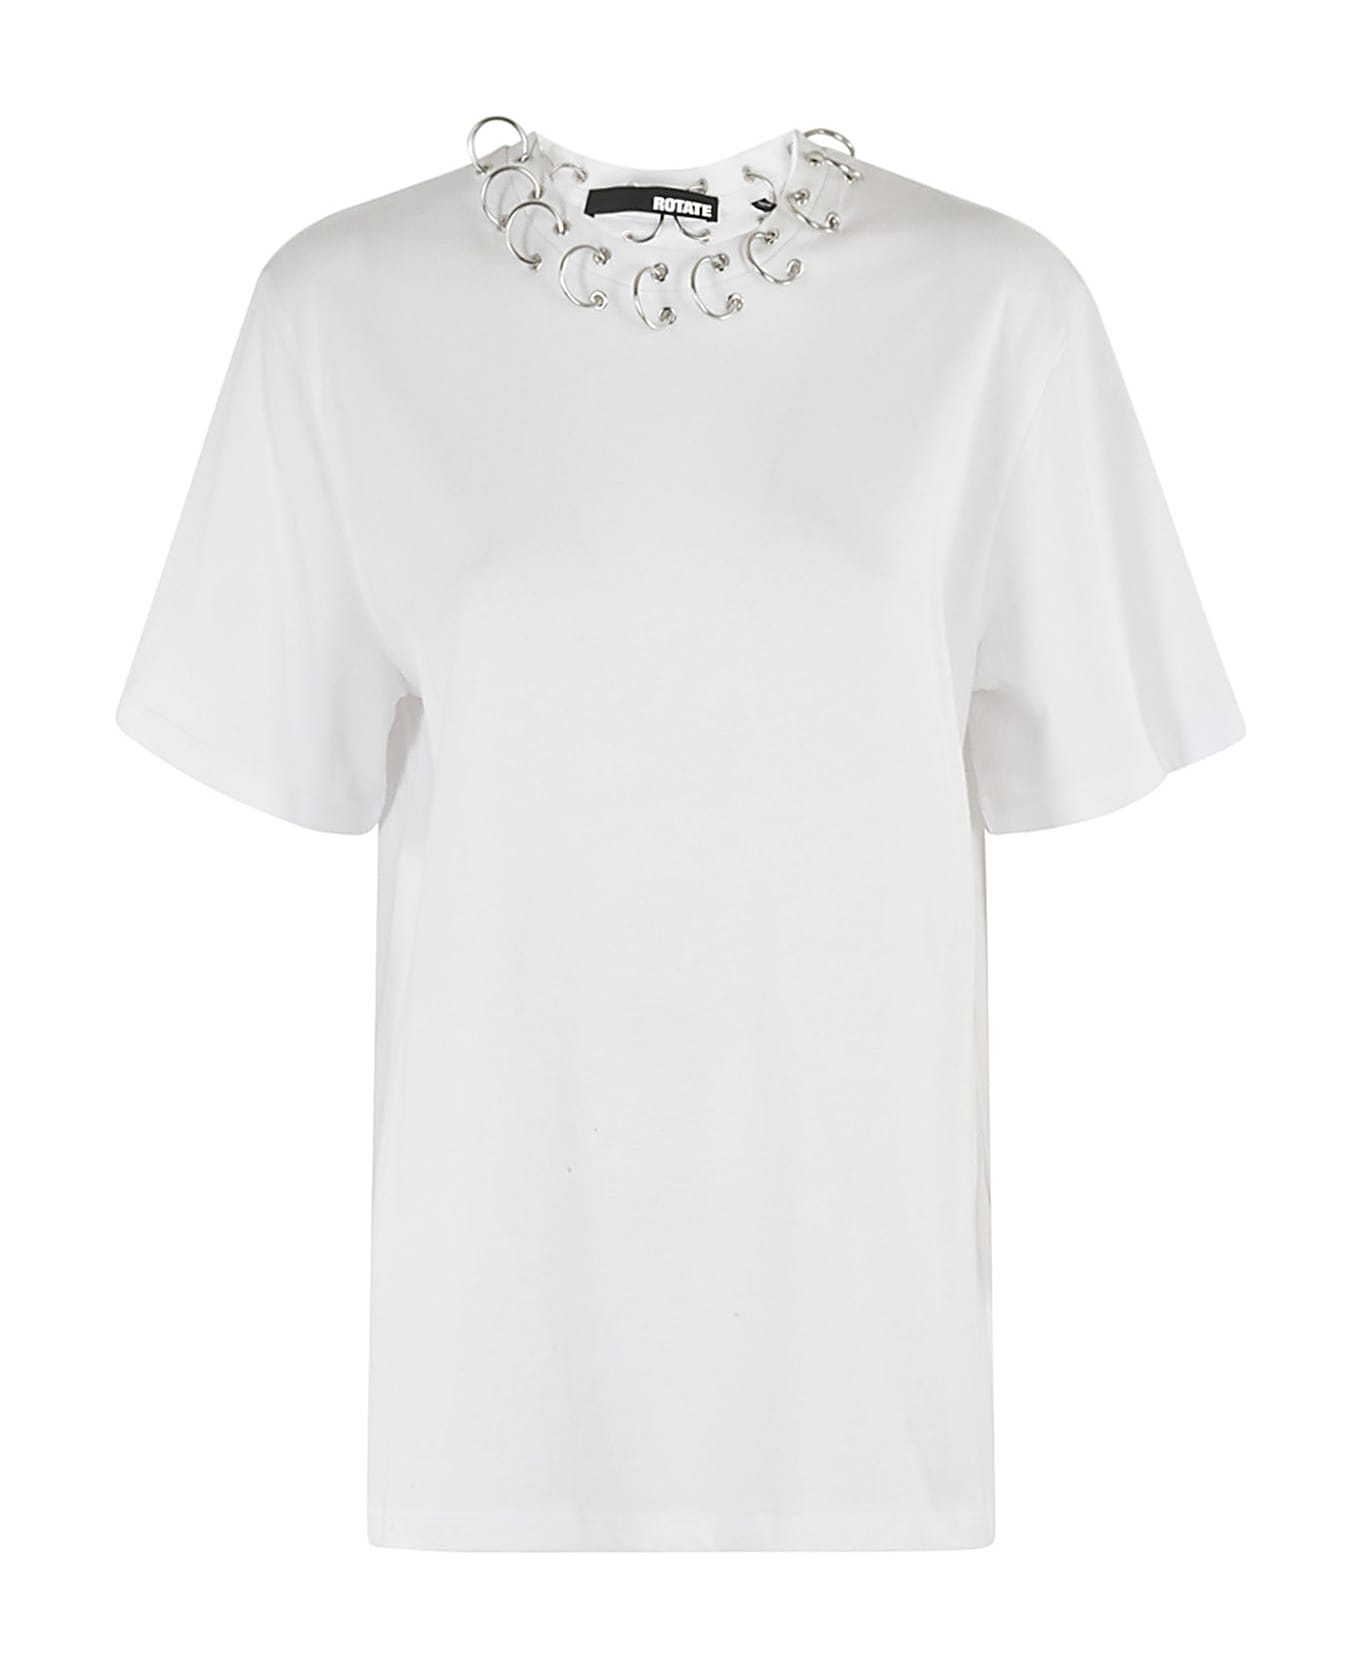 Rotate by Birger Christensen 'oversize Ring' Cotton T-shirt - WHITE Tシャツ